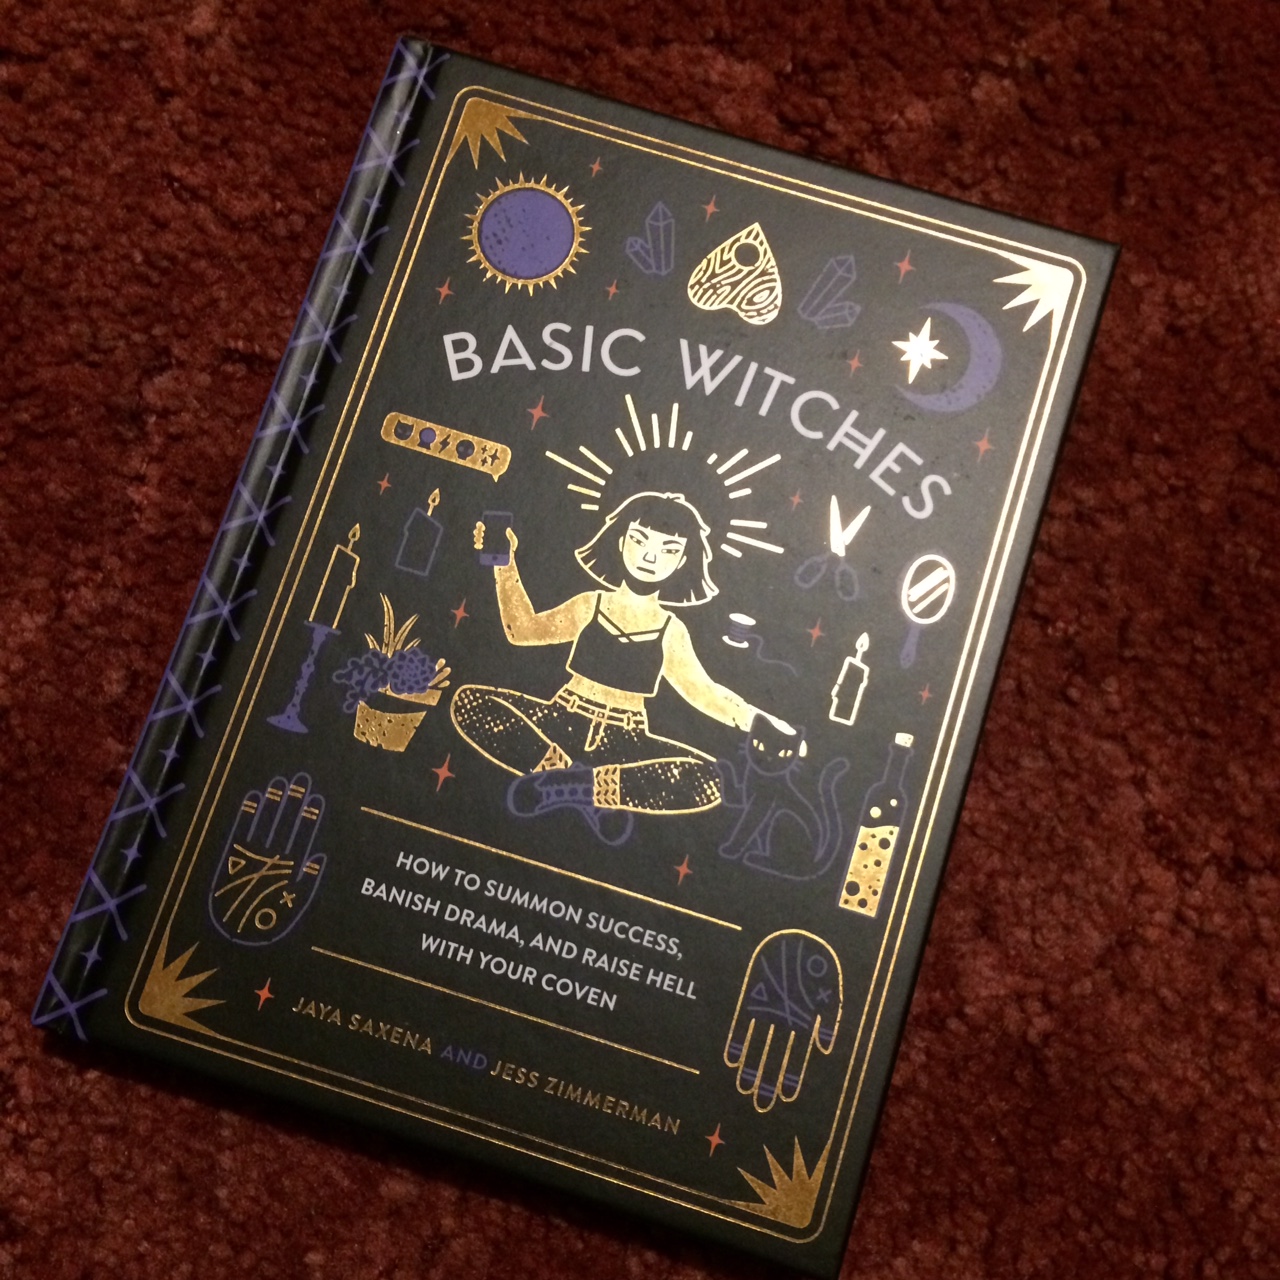 Basic Witches by Jaya Saxena and Jess Zimmerman